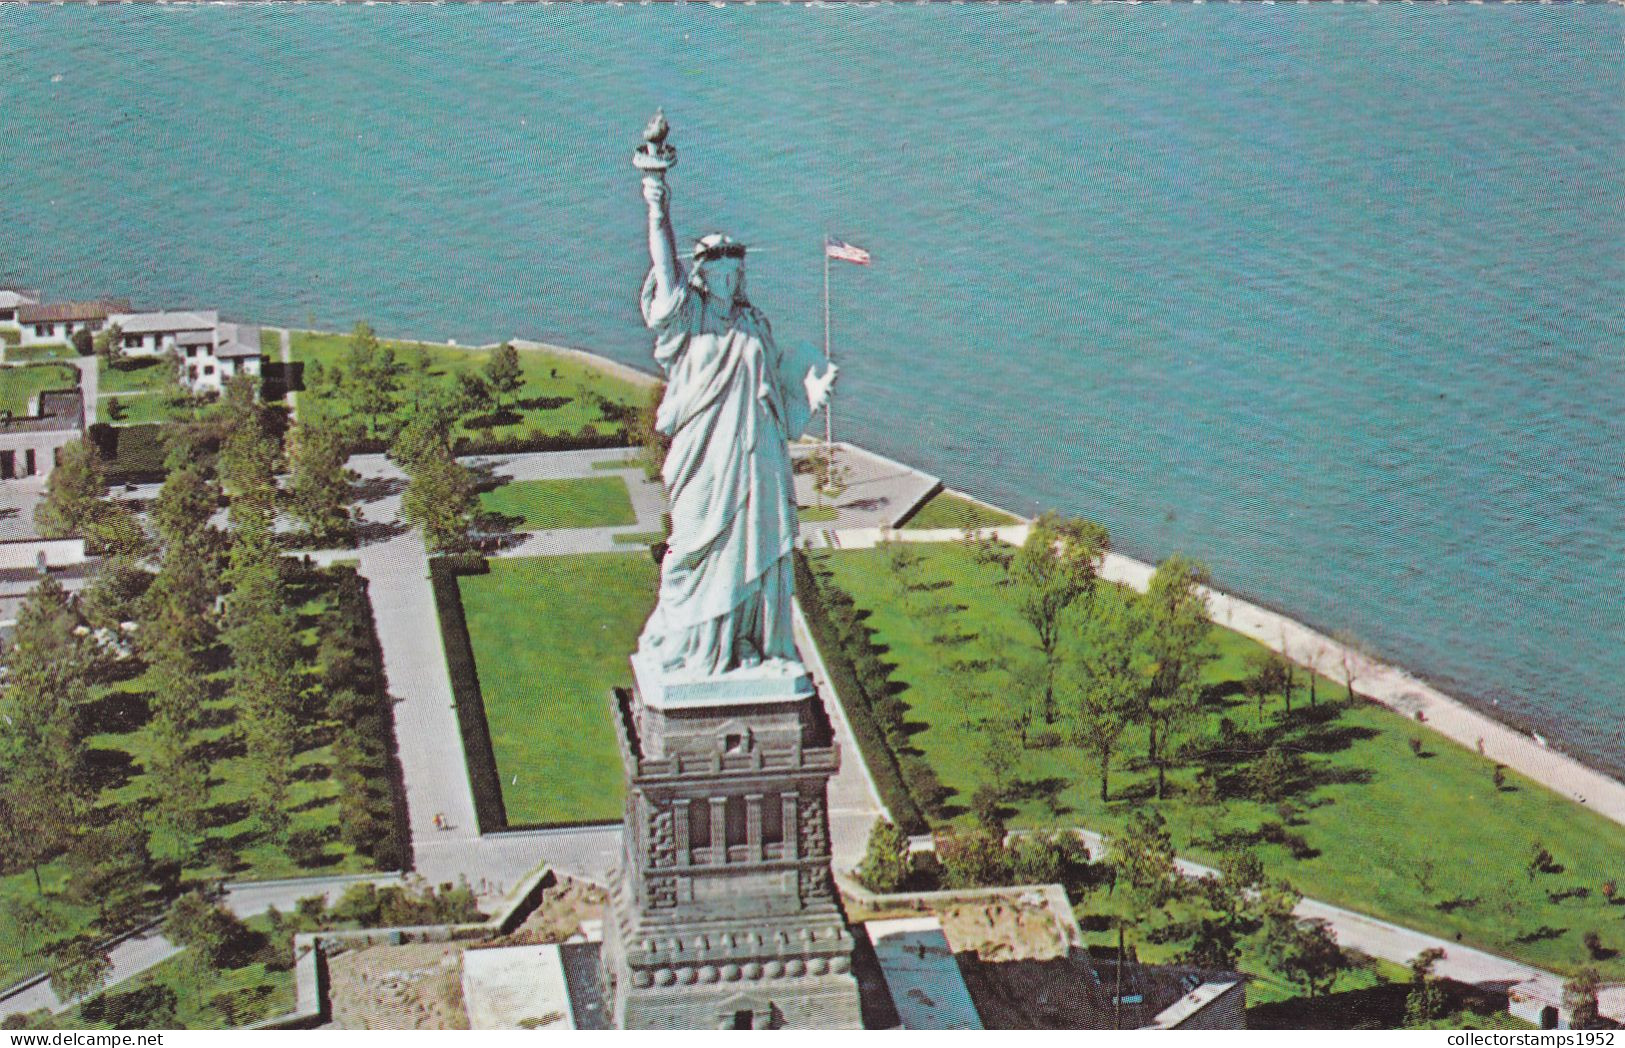 NEW YORK, STATUE OF LIBERTY, LIBERTY ISLAND IN NEW YORK HARBOR, UNITED STATES - Statue Of Liberty